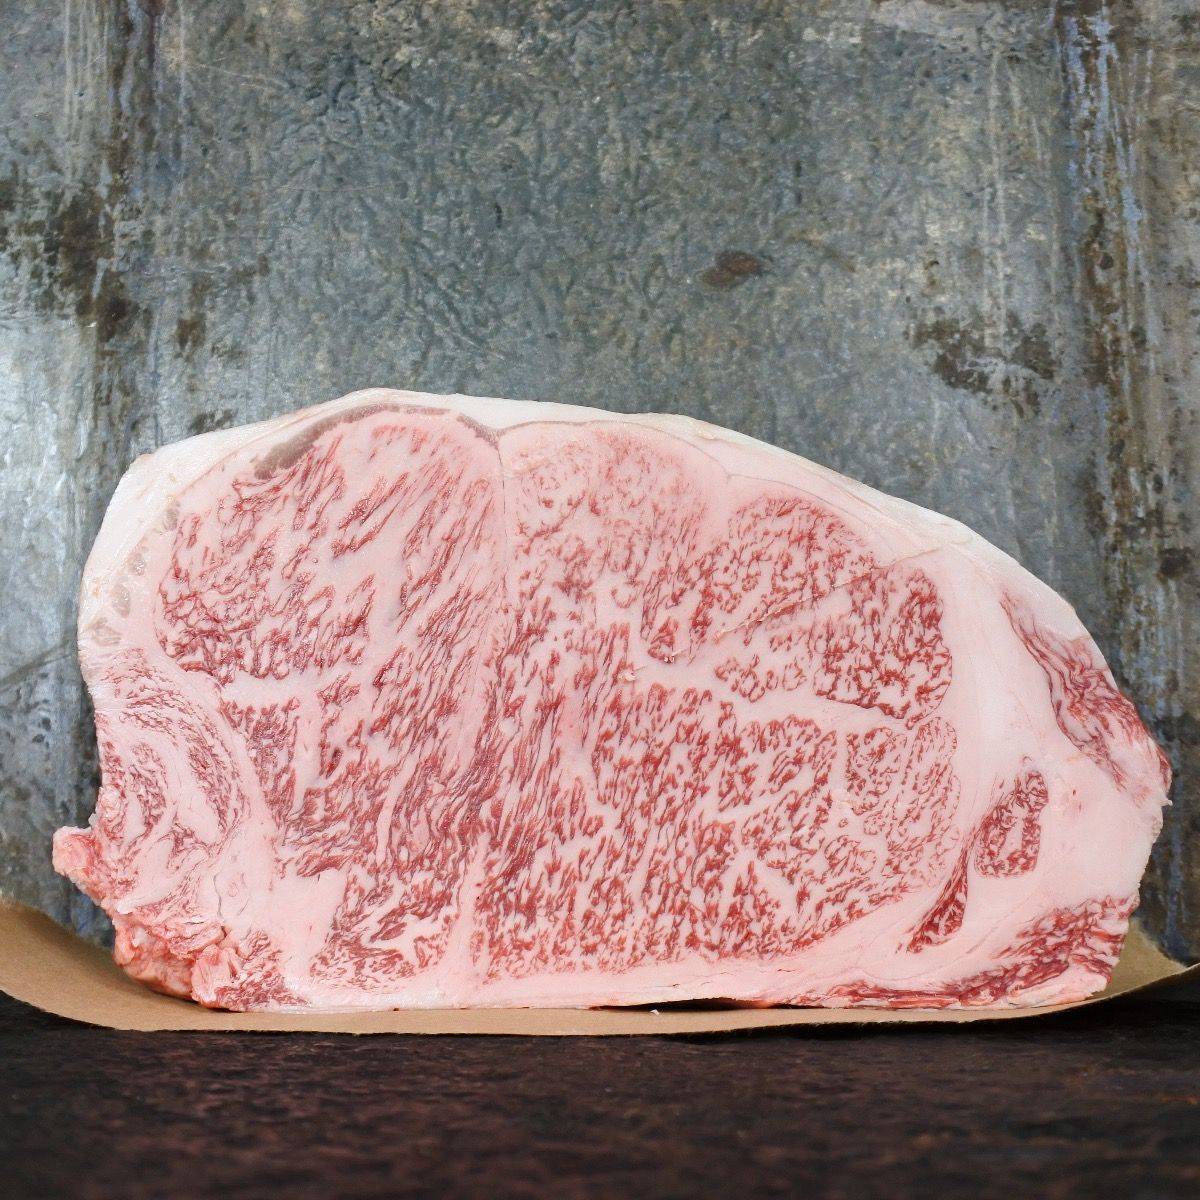 Kyoto Myabi Beef